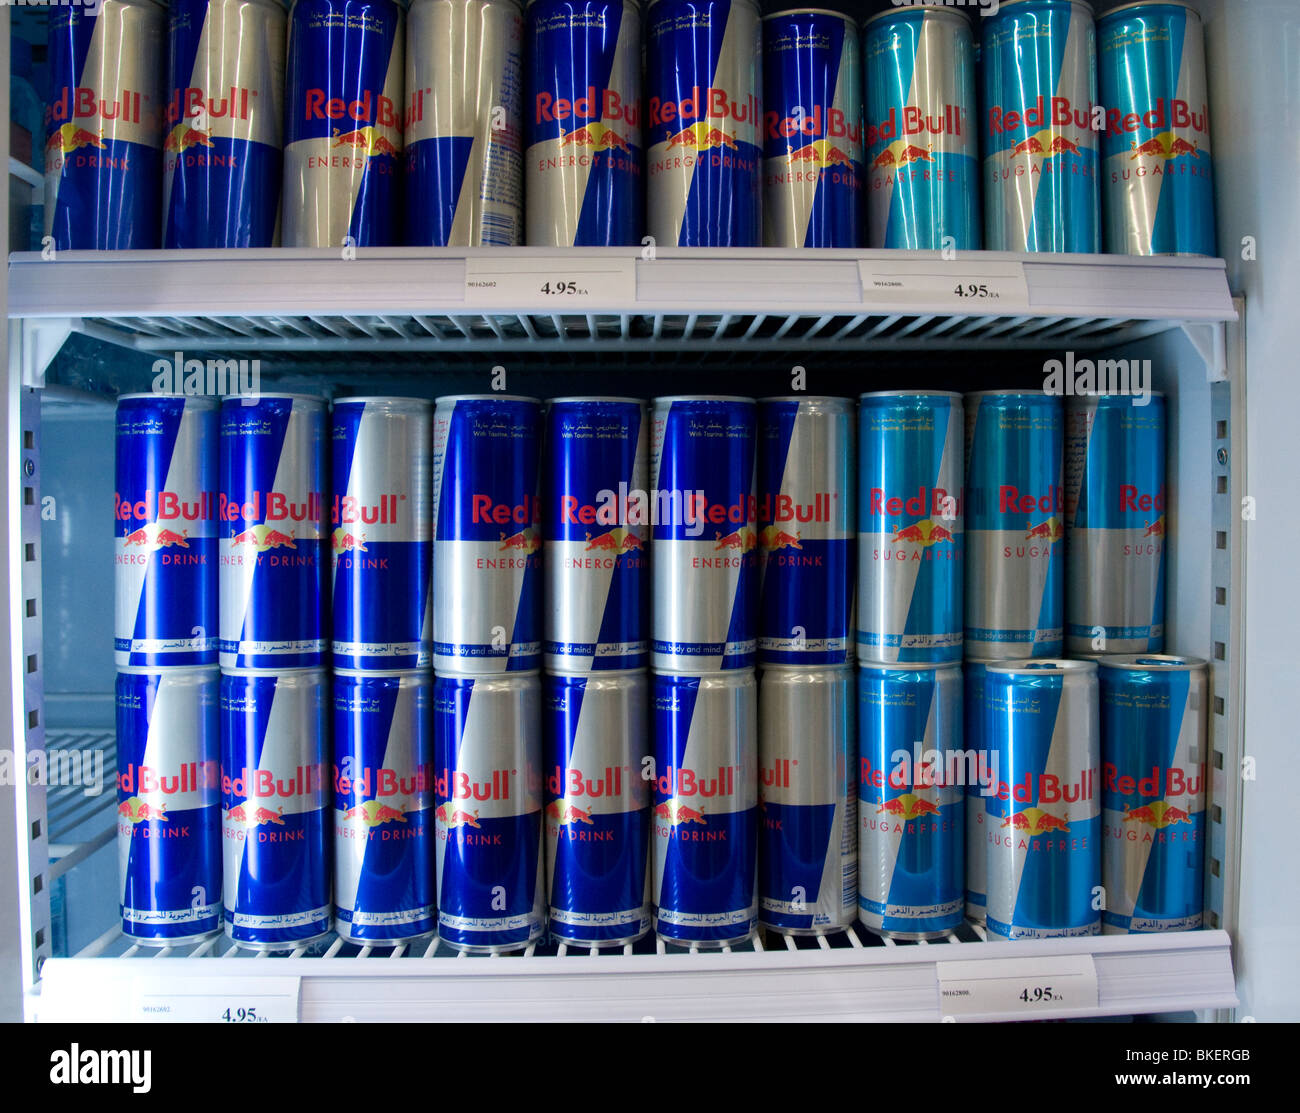 Red Bull Dosen im Kühlschrank Stockfotografie - Alamy